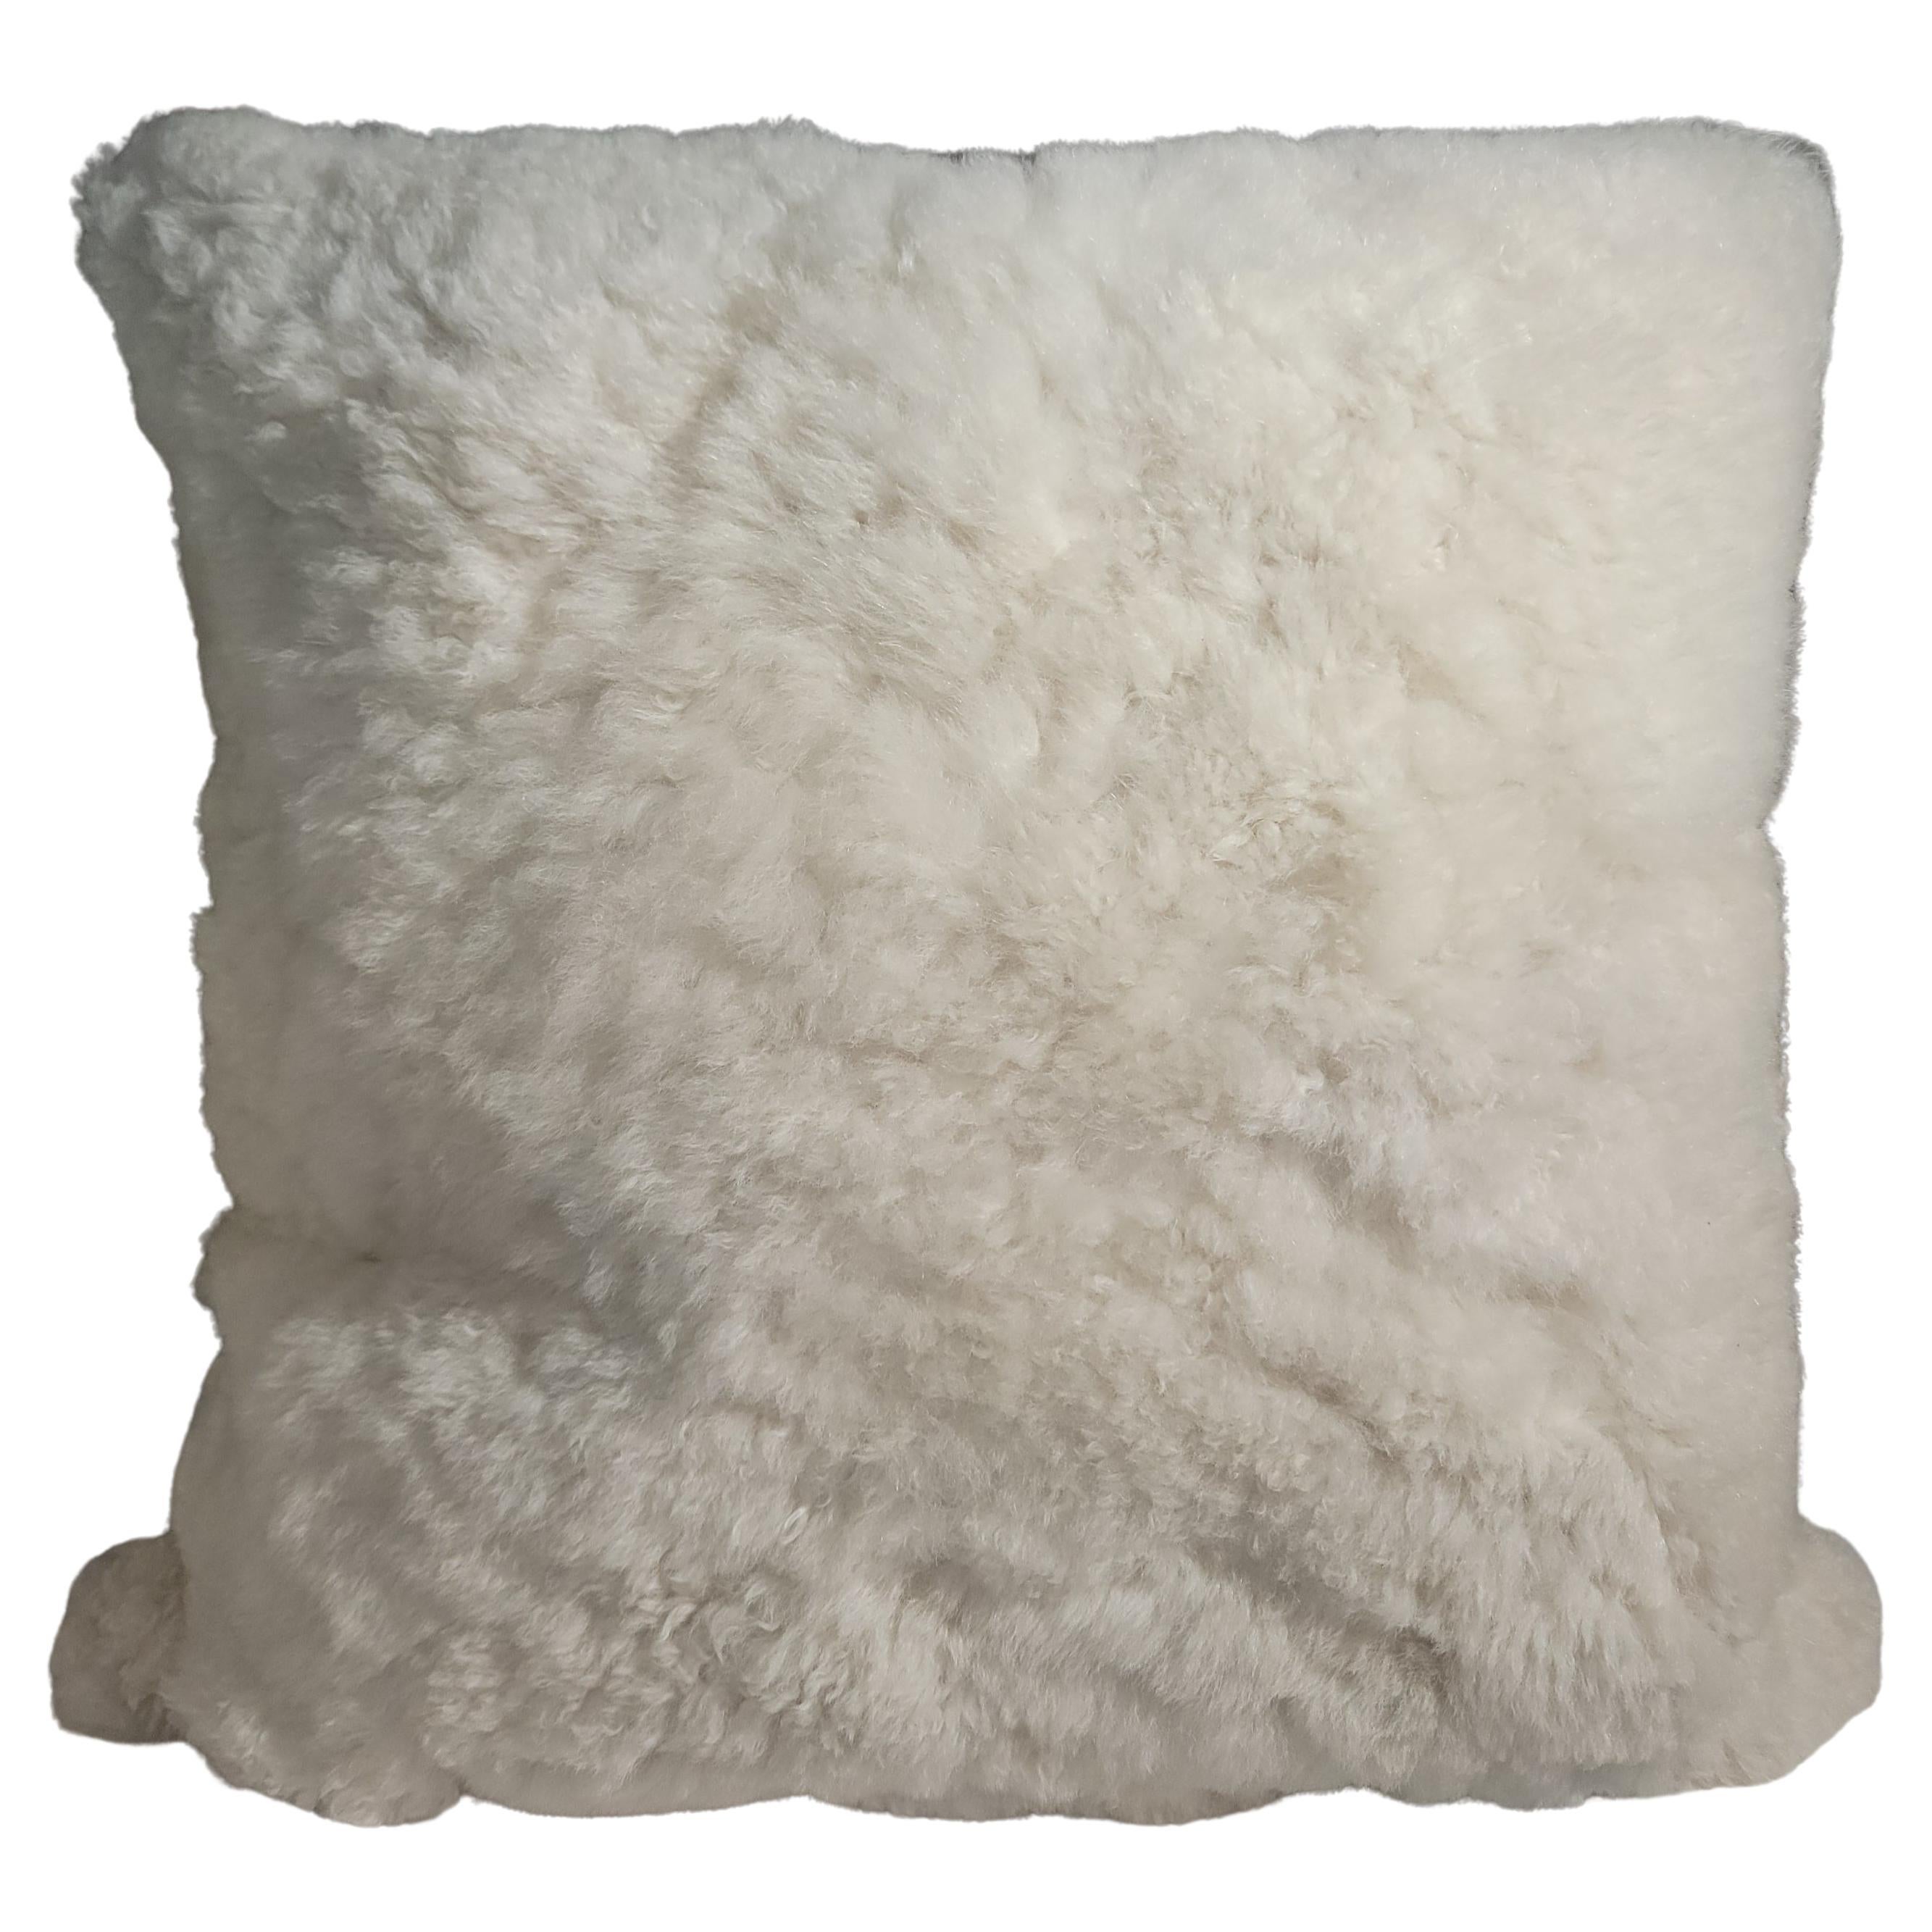 Shearing Pillow From Sheep Skin